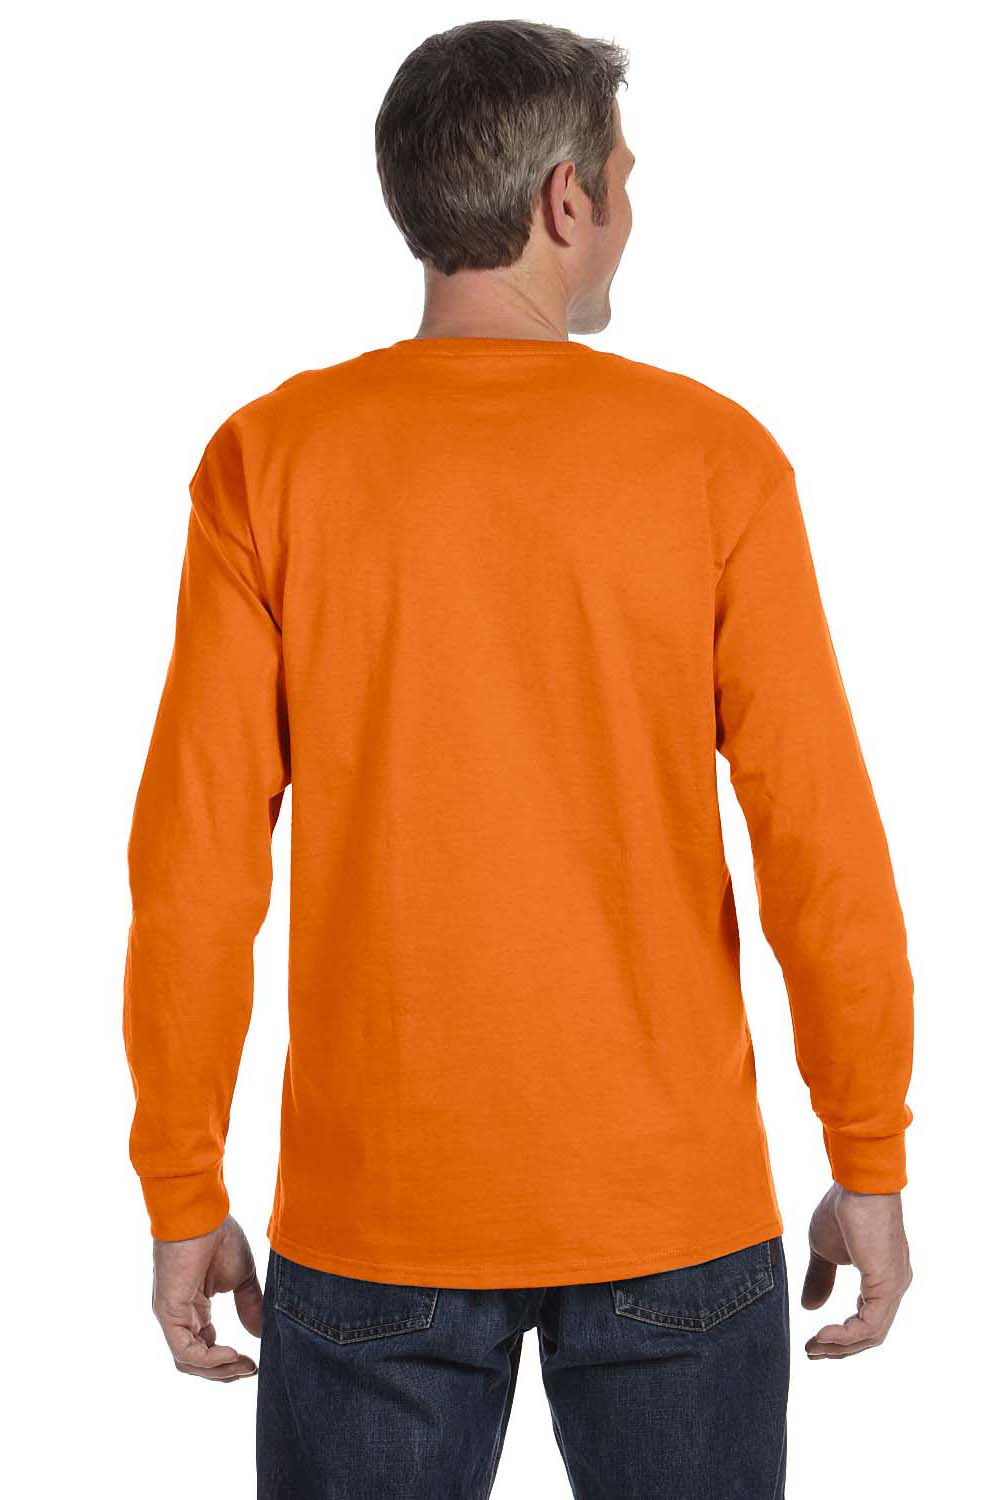 Hanes 5586 Mens ComfortSoft Long Sleeve Crewneck T-Shirt Orange Back